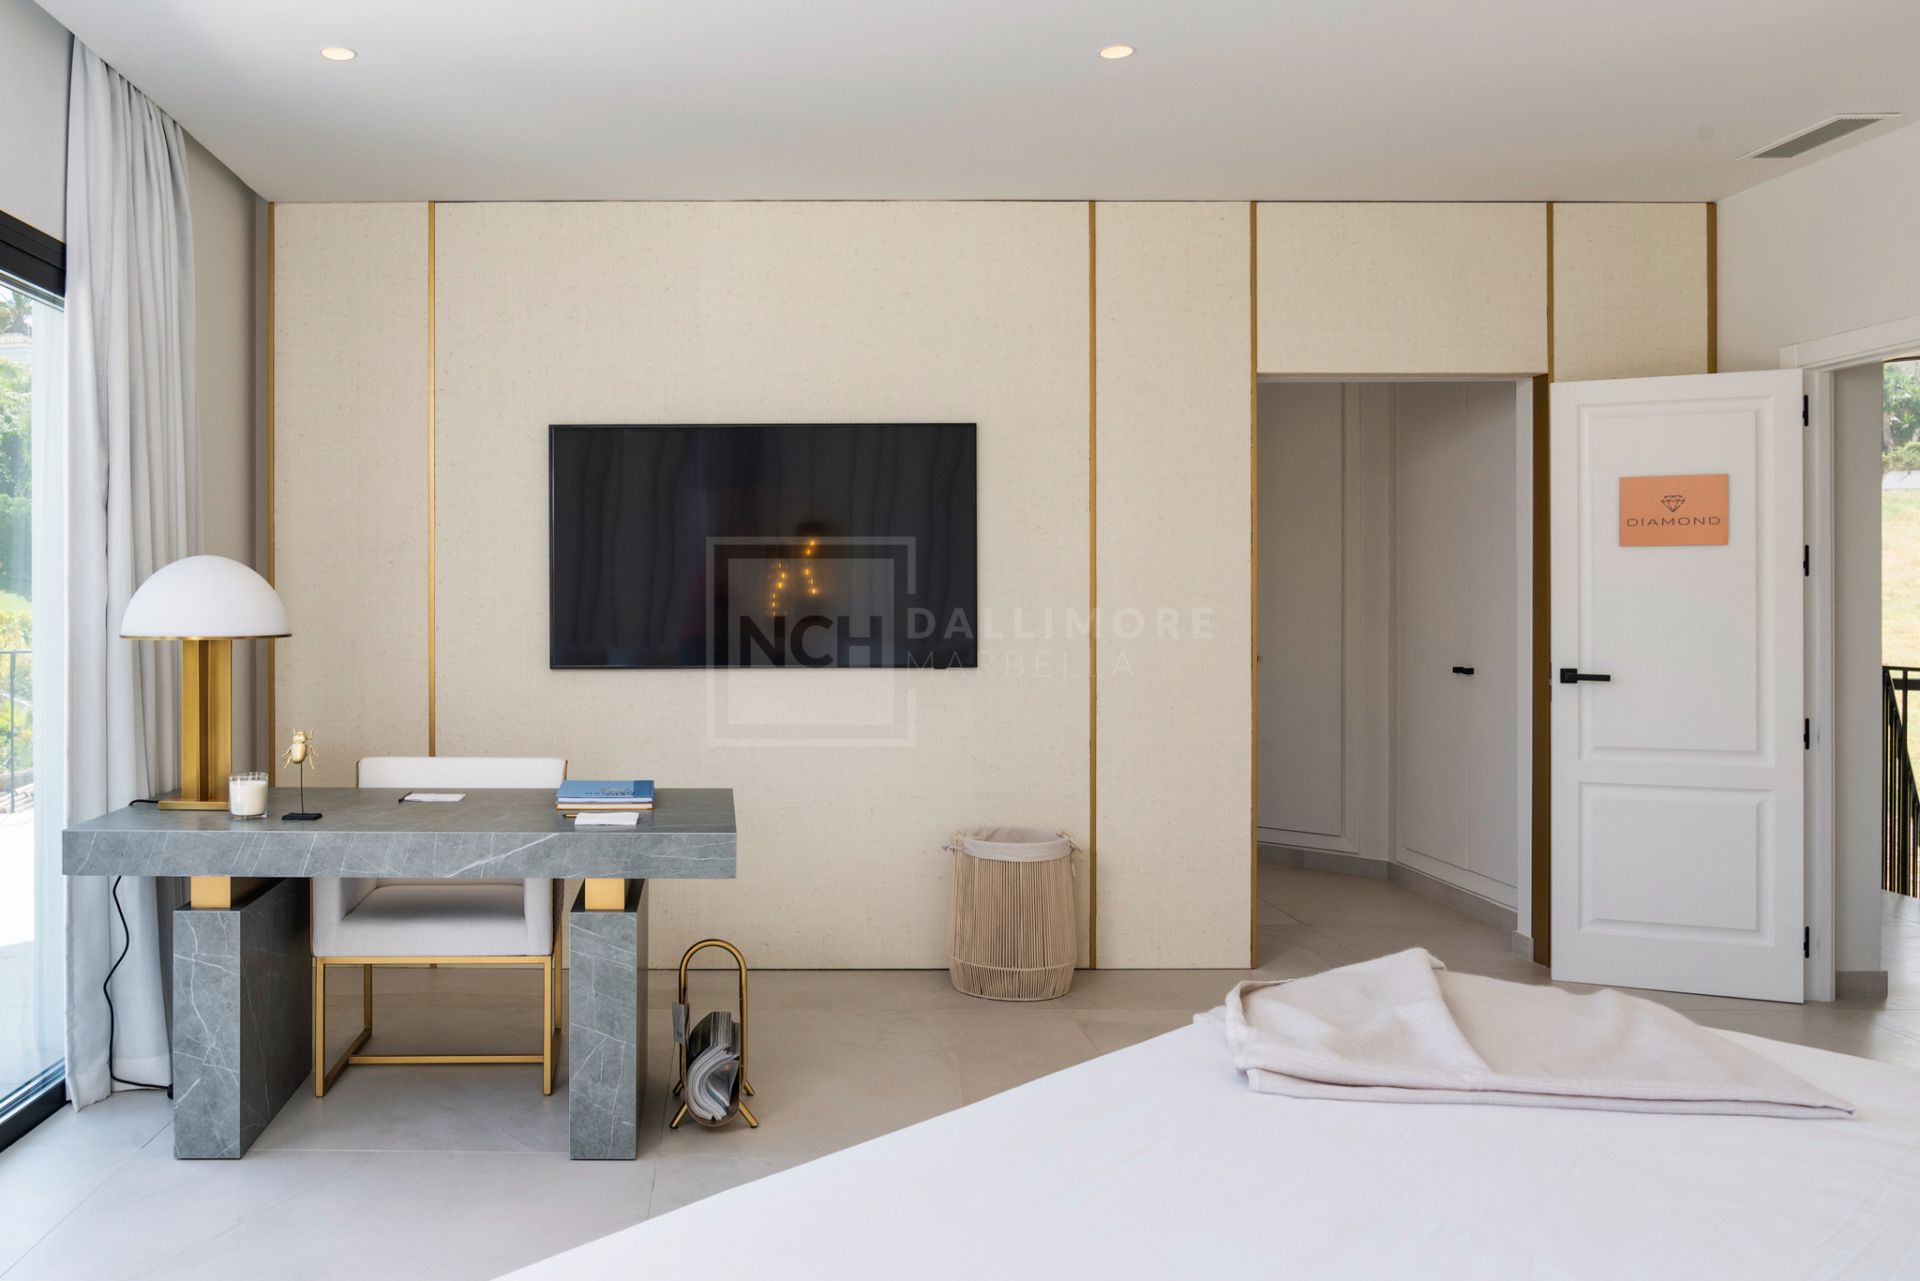 BRAND NEW 6-BEDROOM VILLA LOCATED IN NUEVA ANDALUCIA